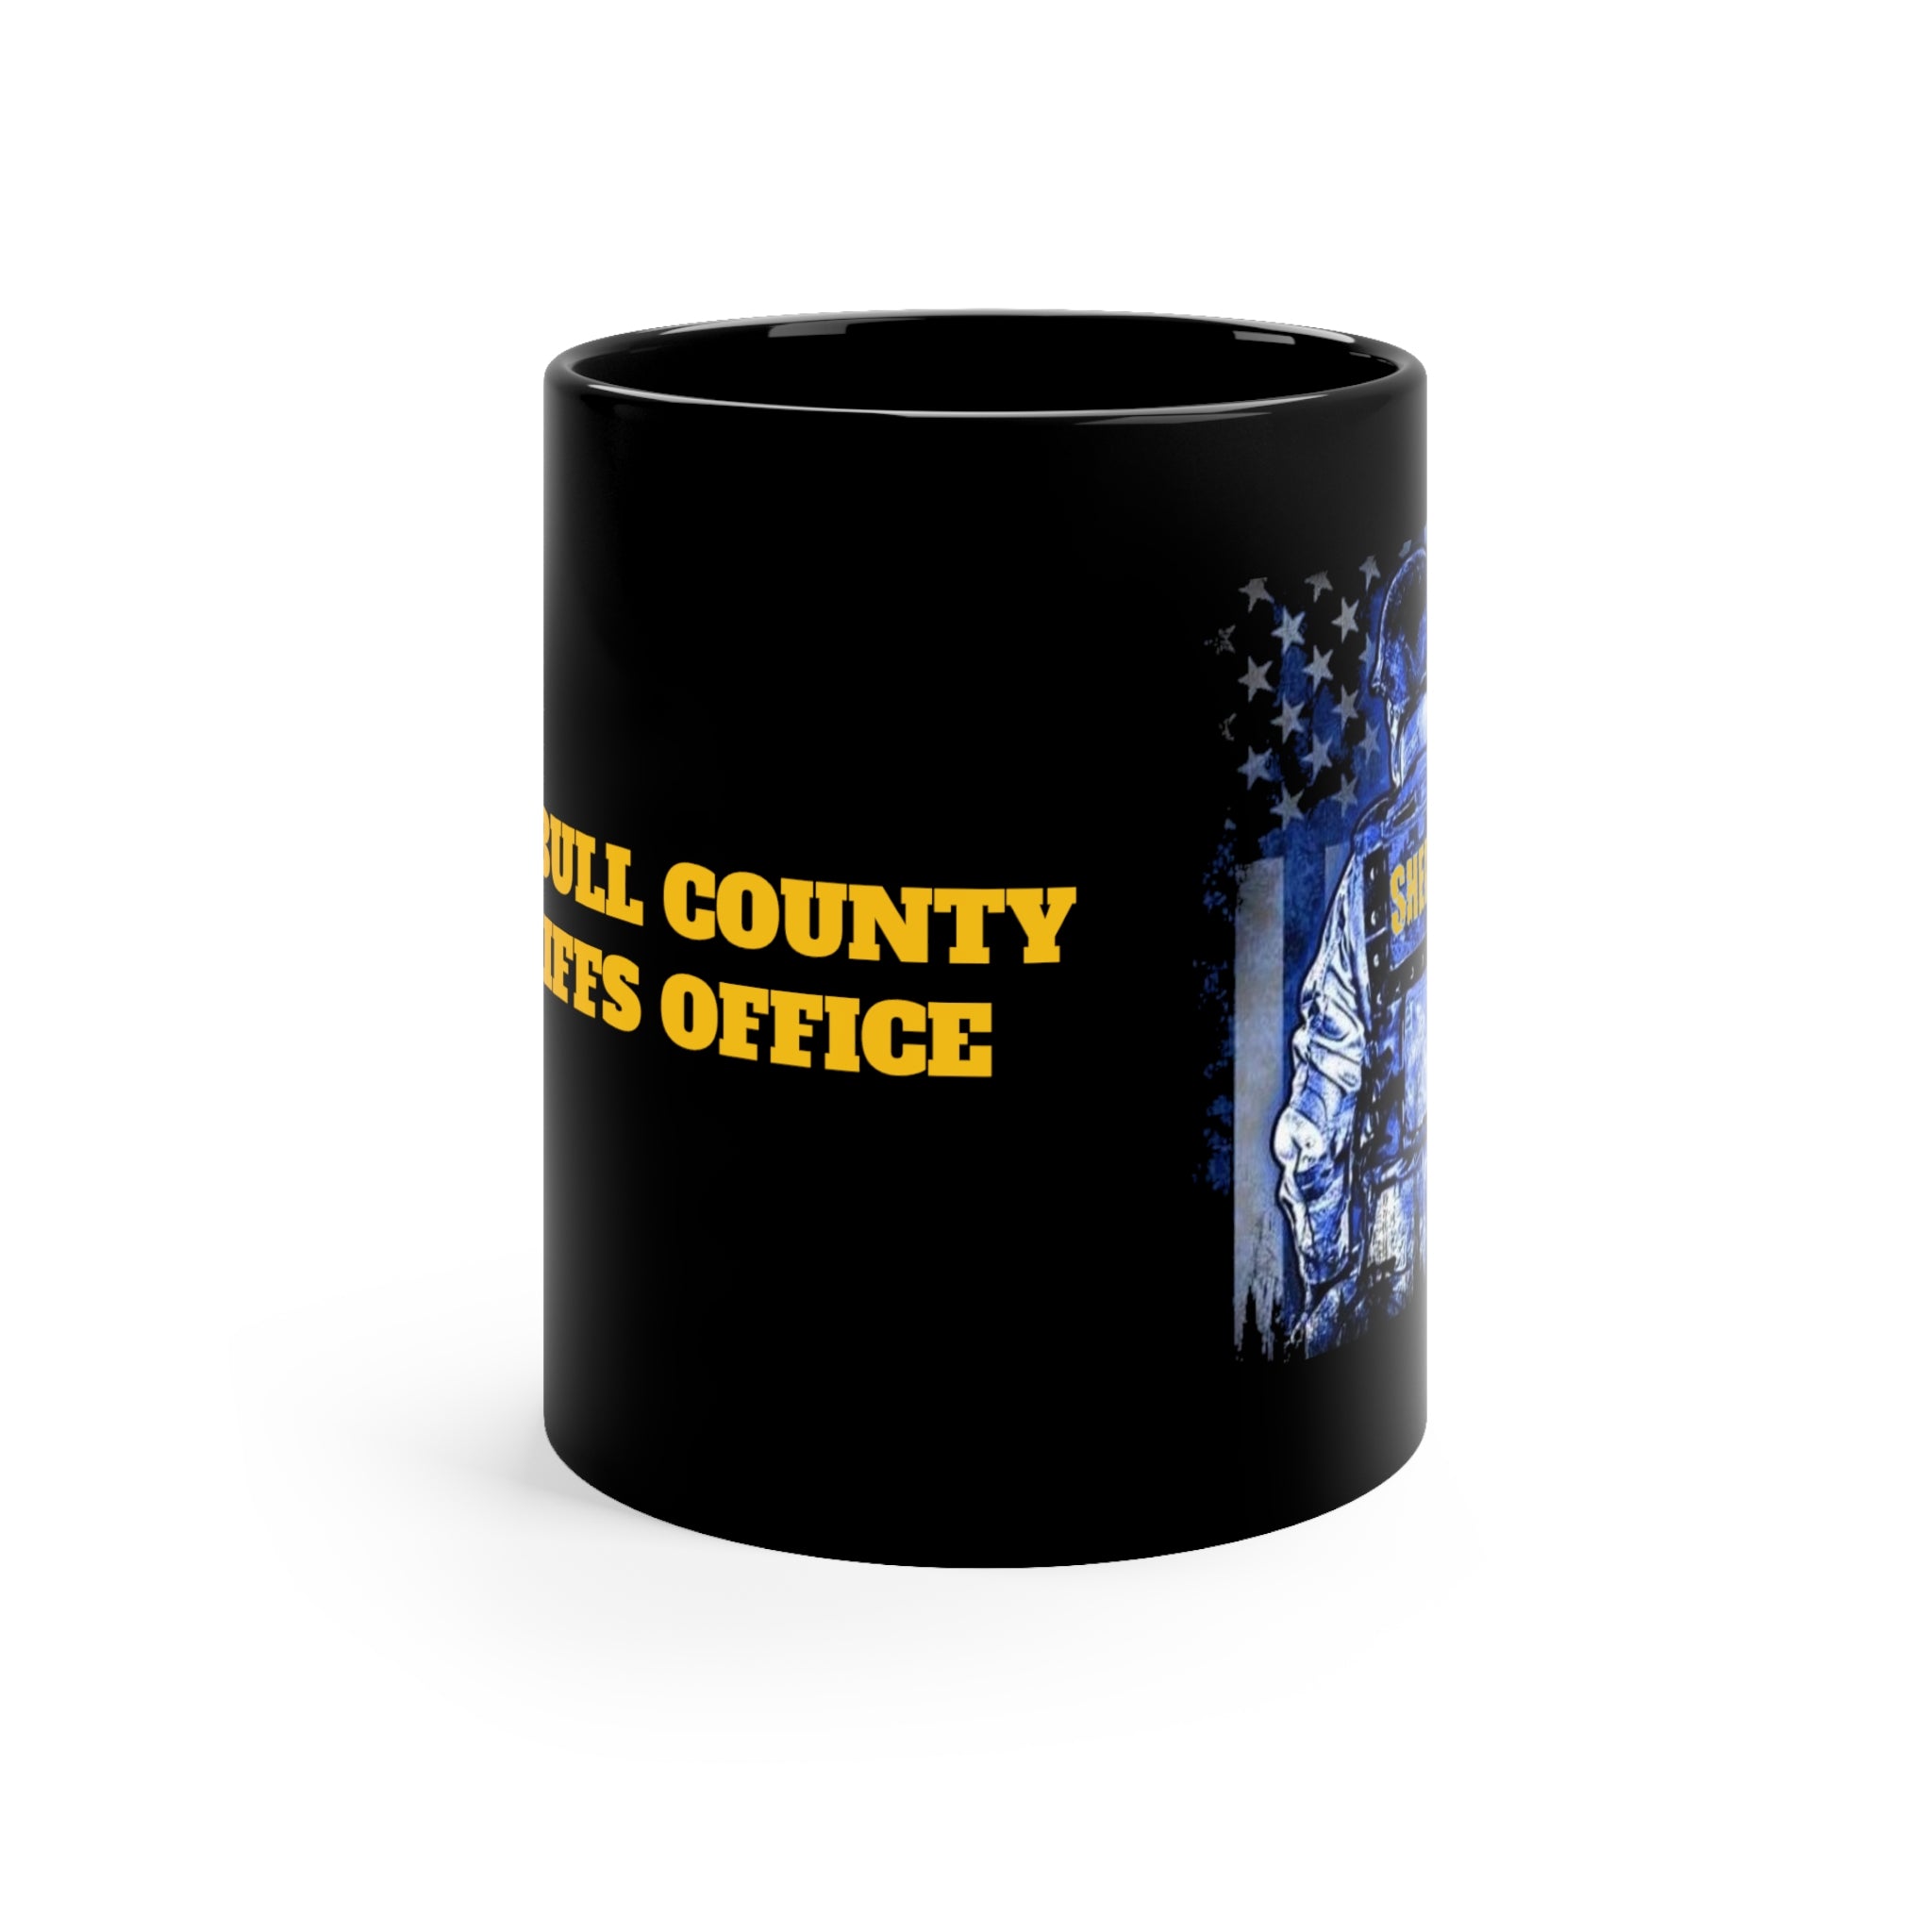 Black mug 11oz - Trumbull County Sheriffs Office